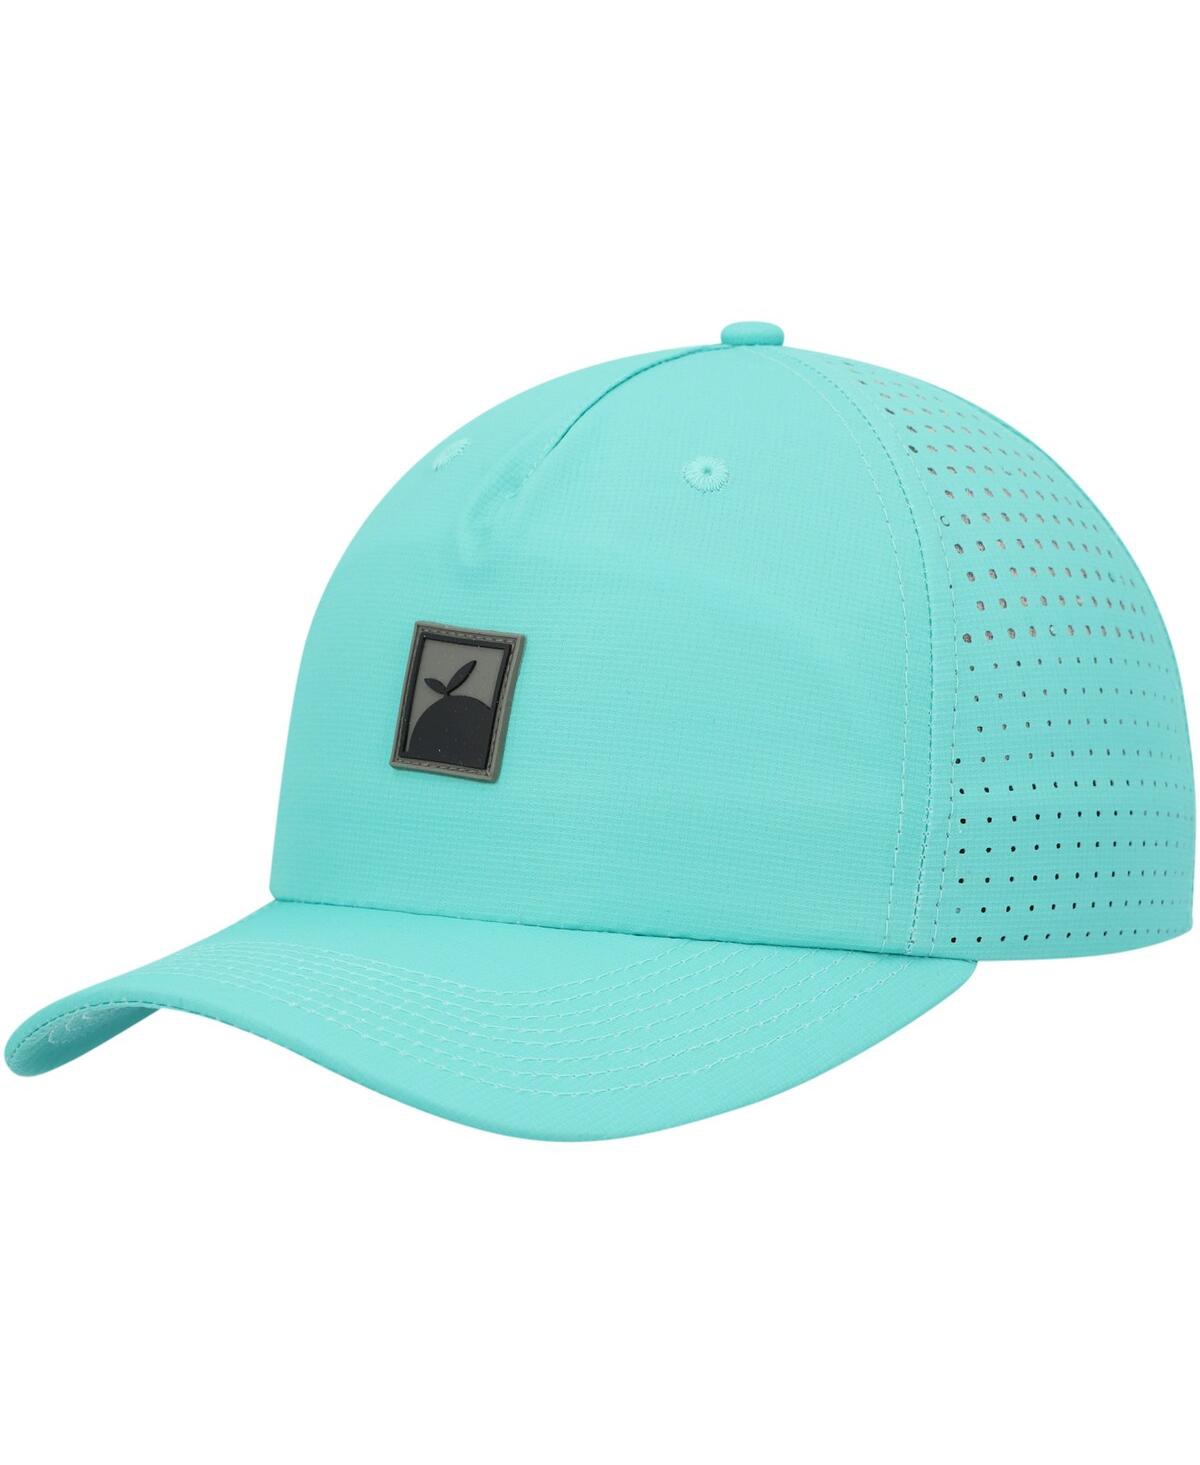 Men's Flomotion Mint Rubber Logo Snapback Hat - Mint